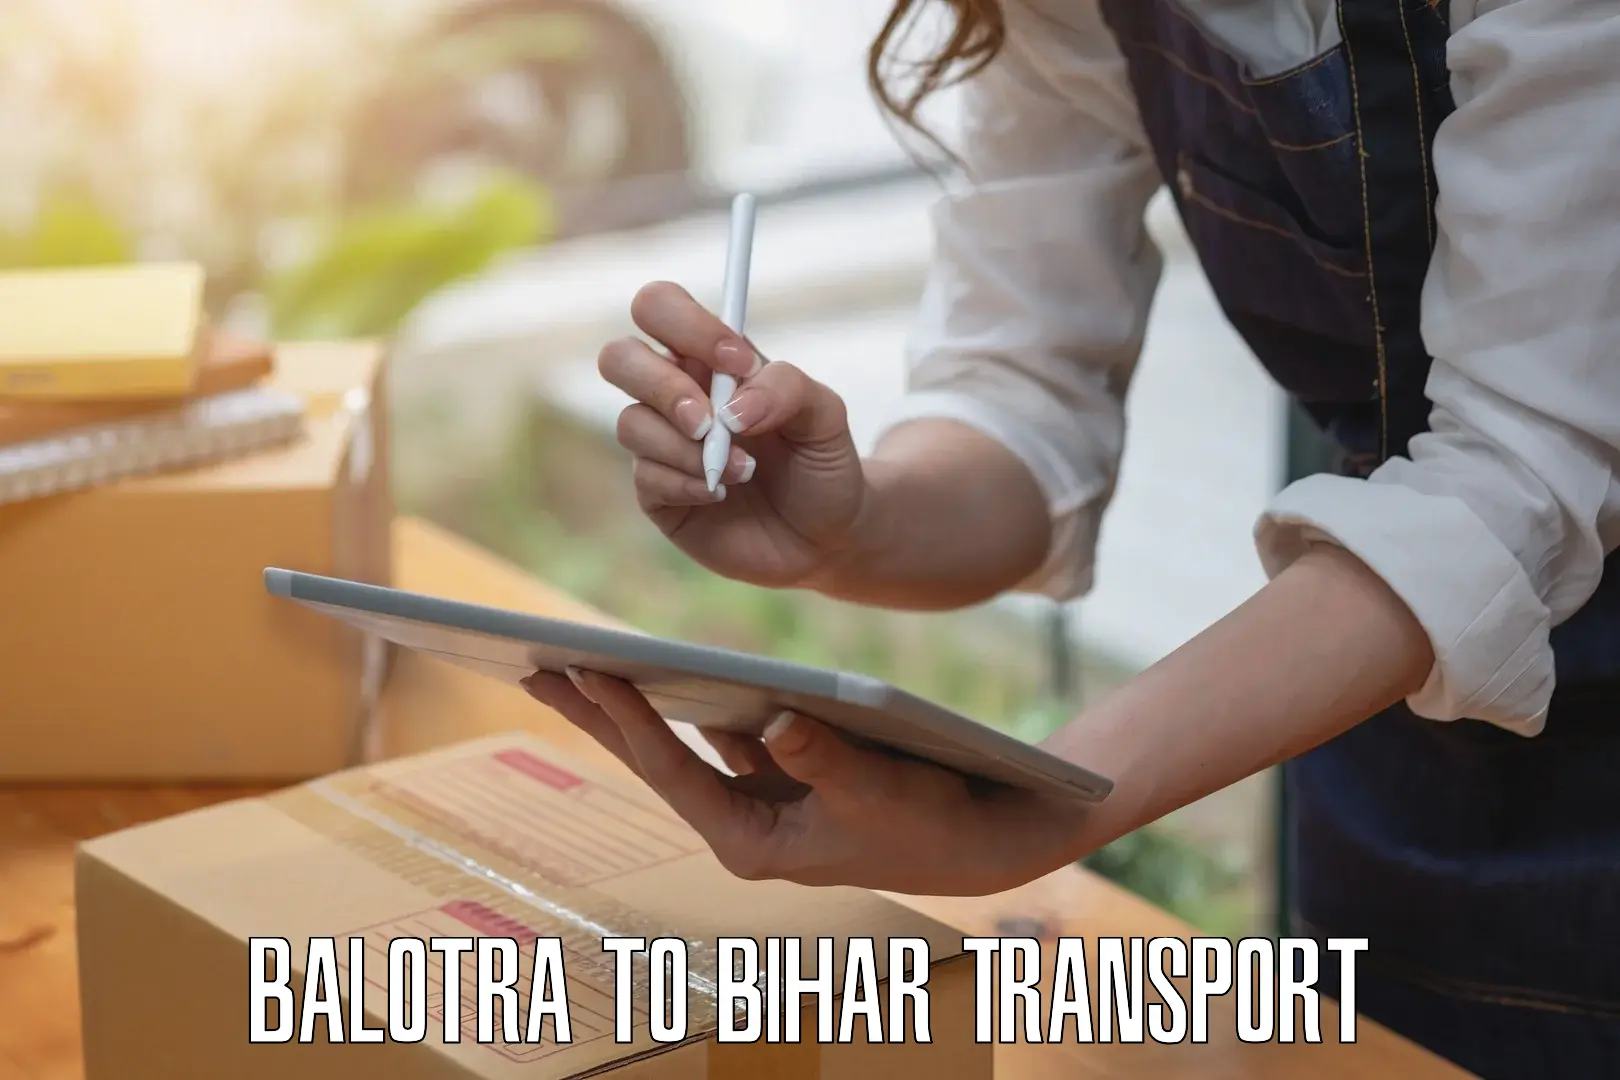 Sending bike to another city Balotra to Bihar